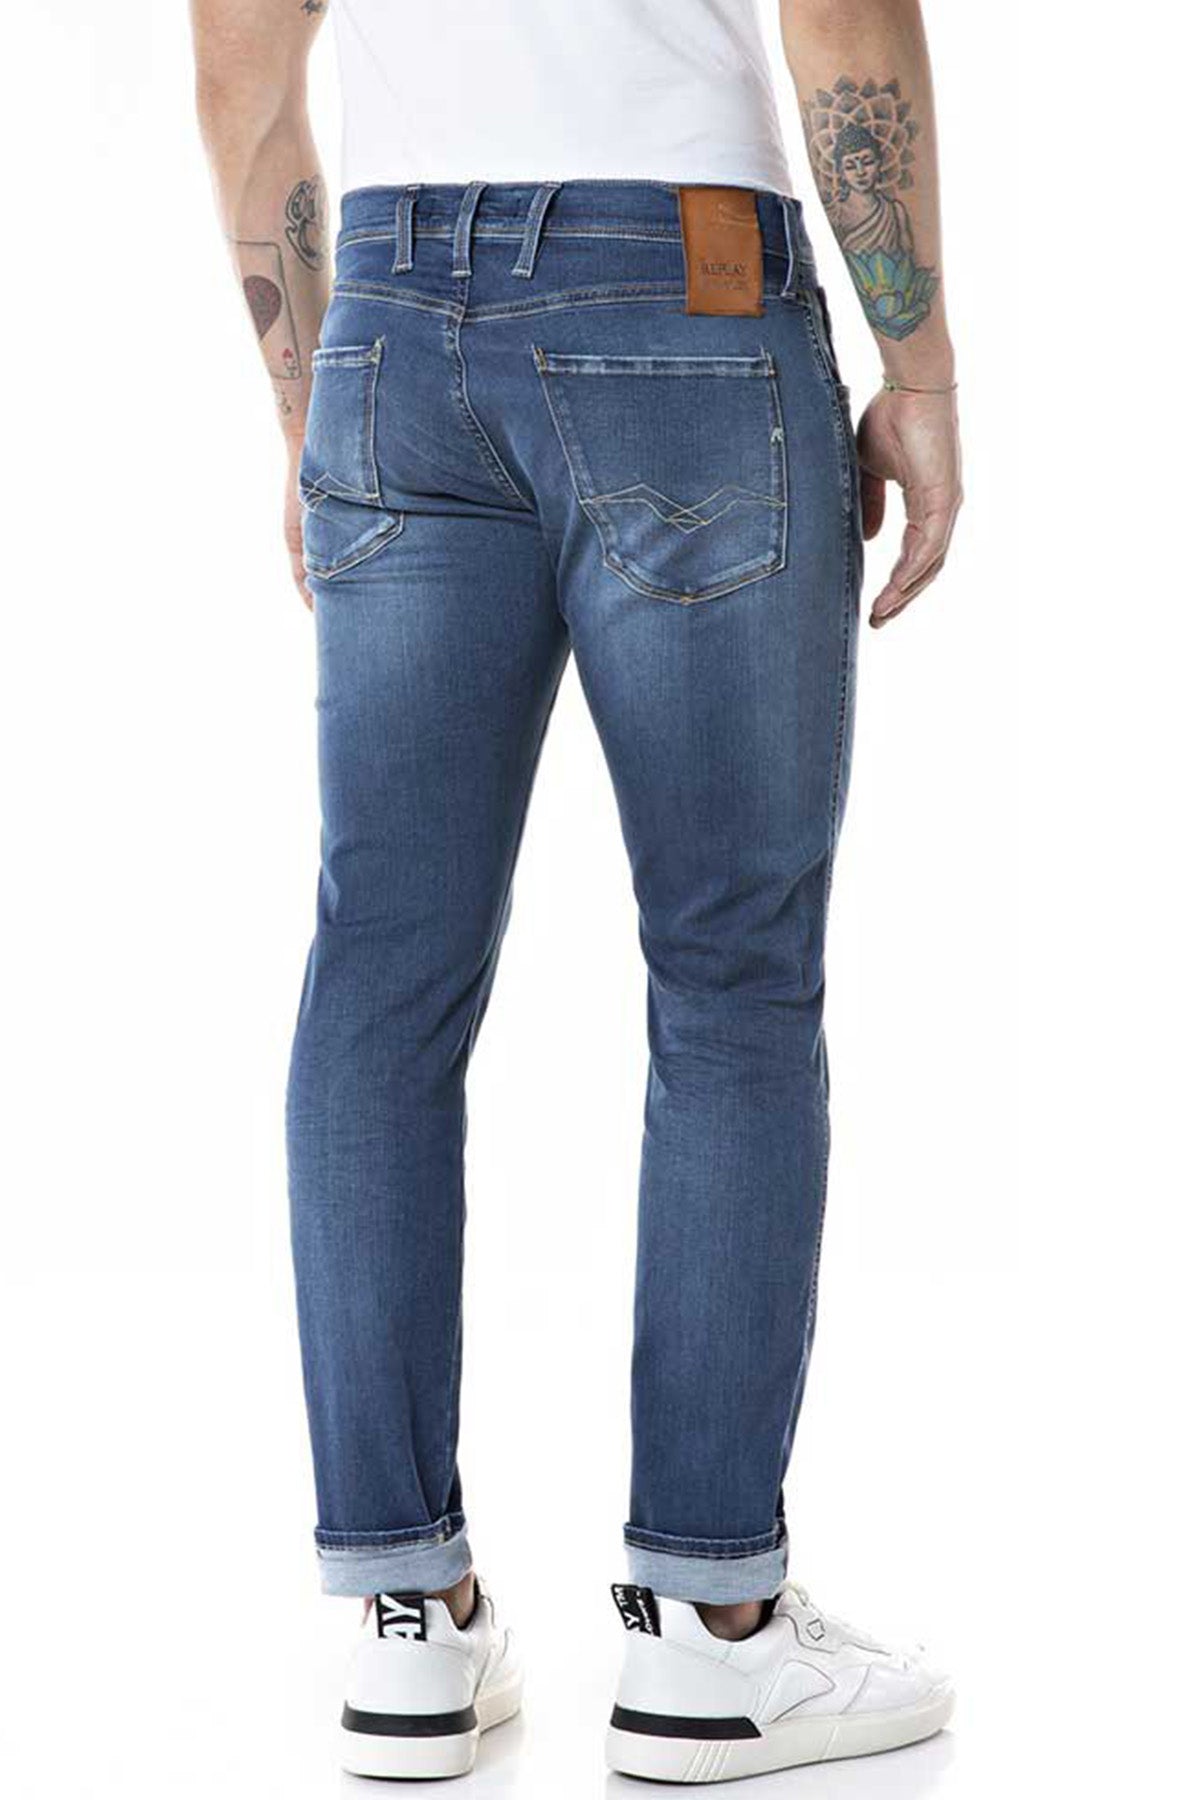 Replay Anbass Hyperflex X-Lite Re-Used Slim Fit Jeans-Libas Trendy Fashion Store